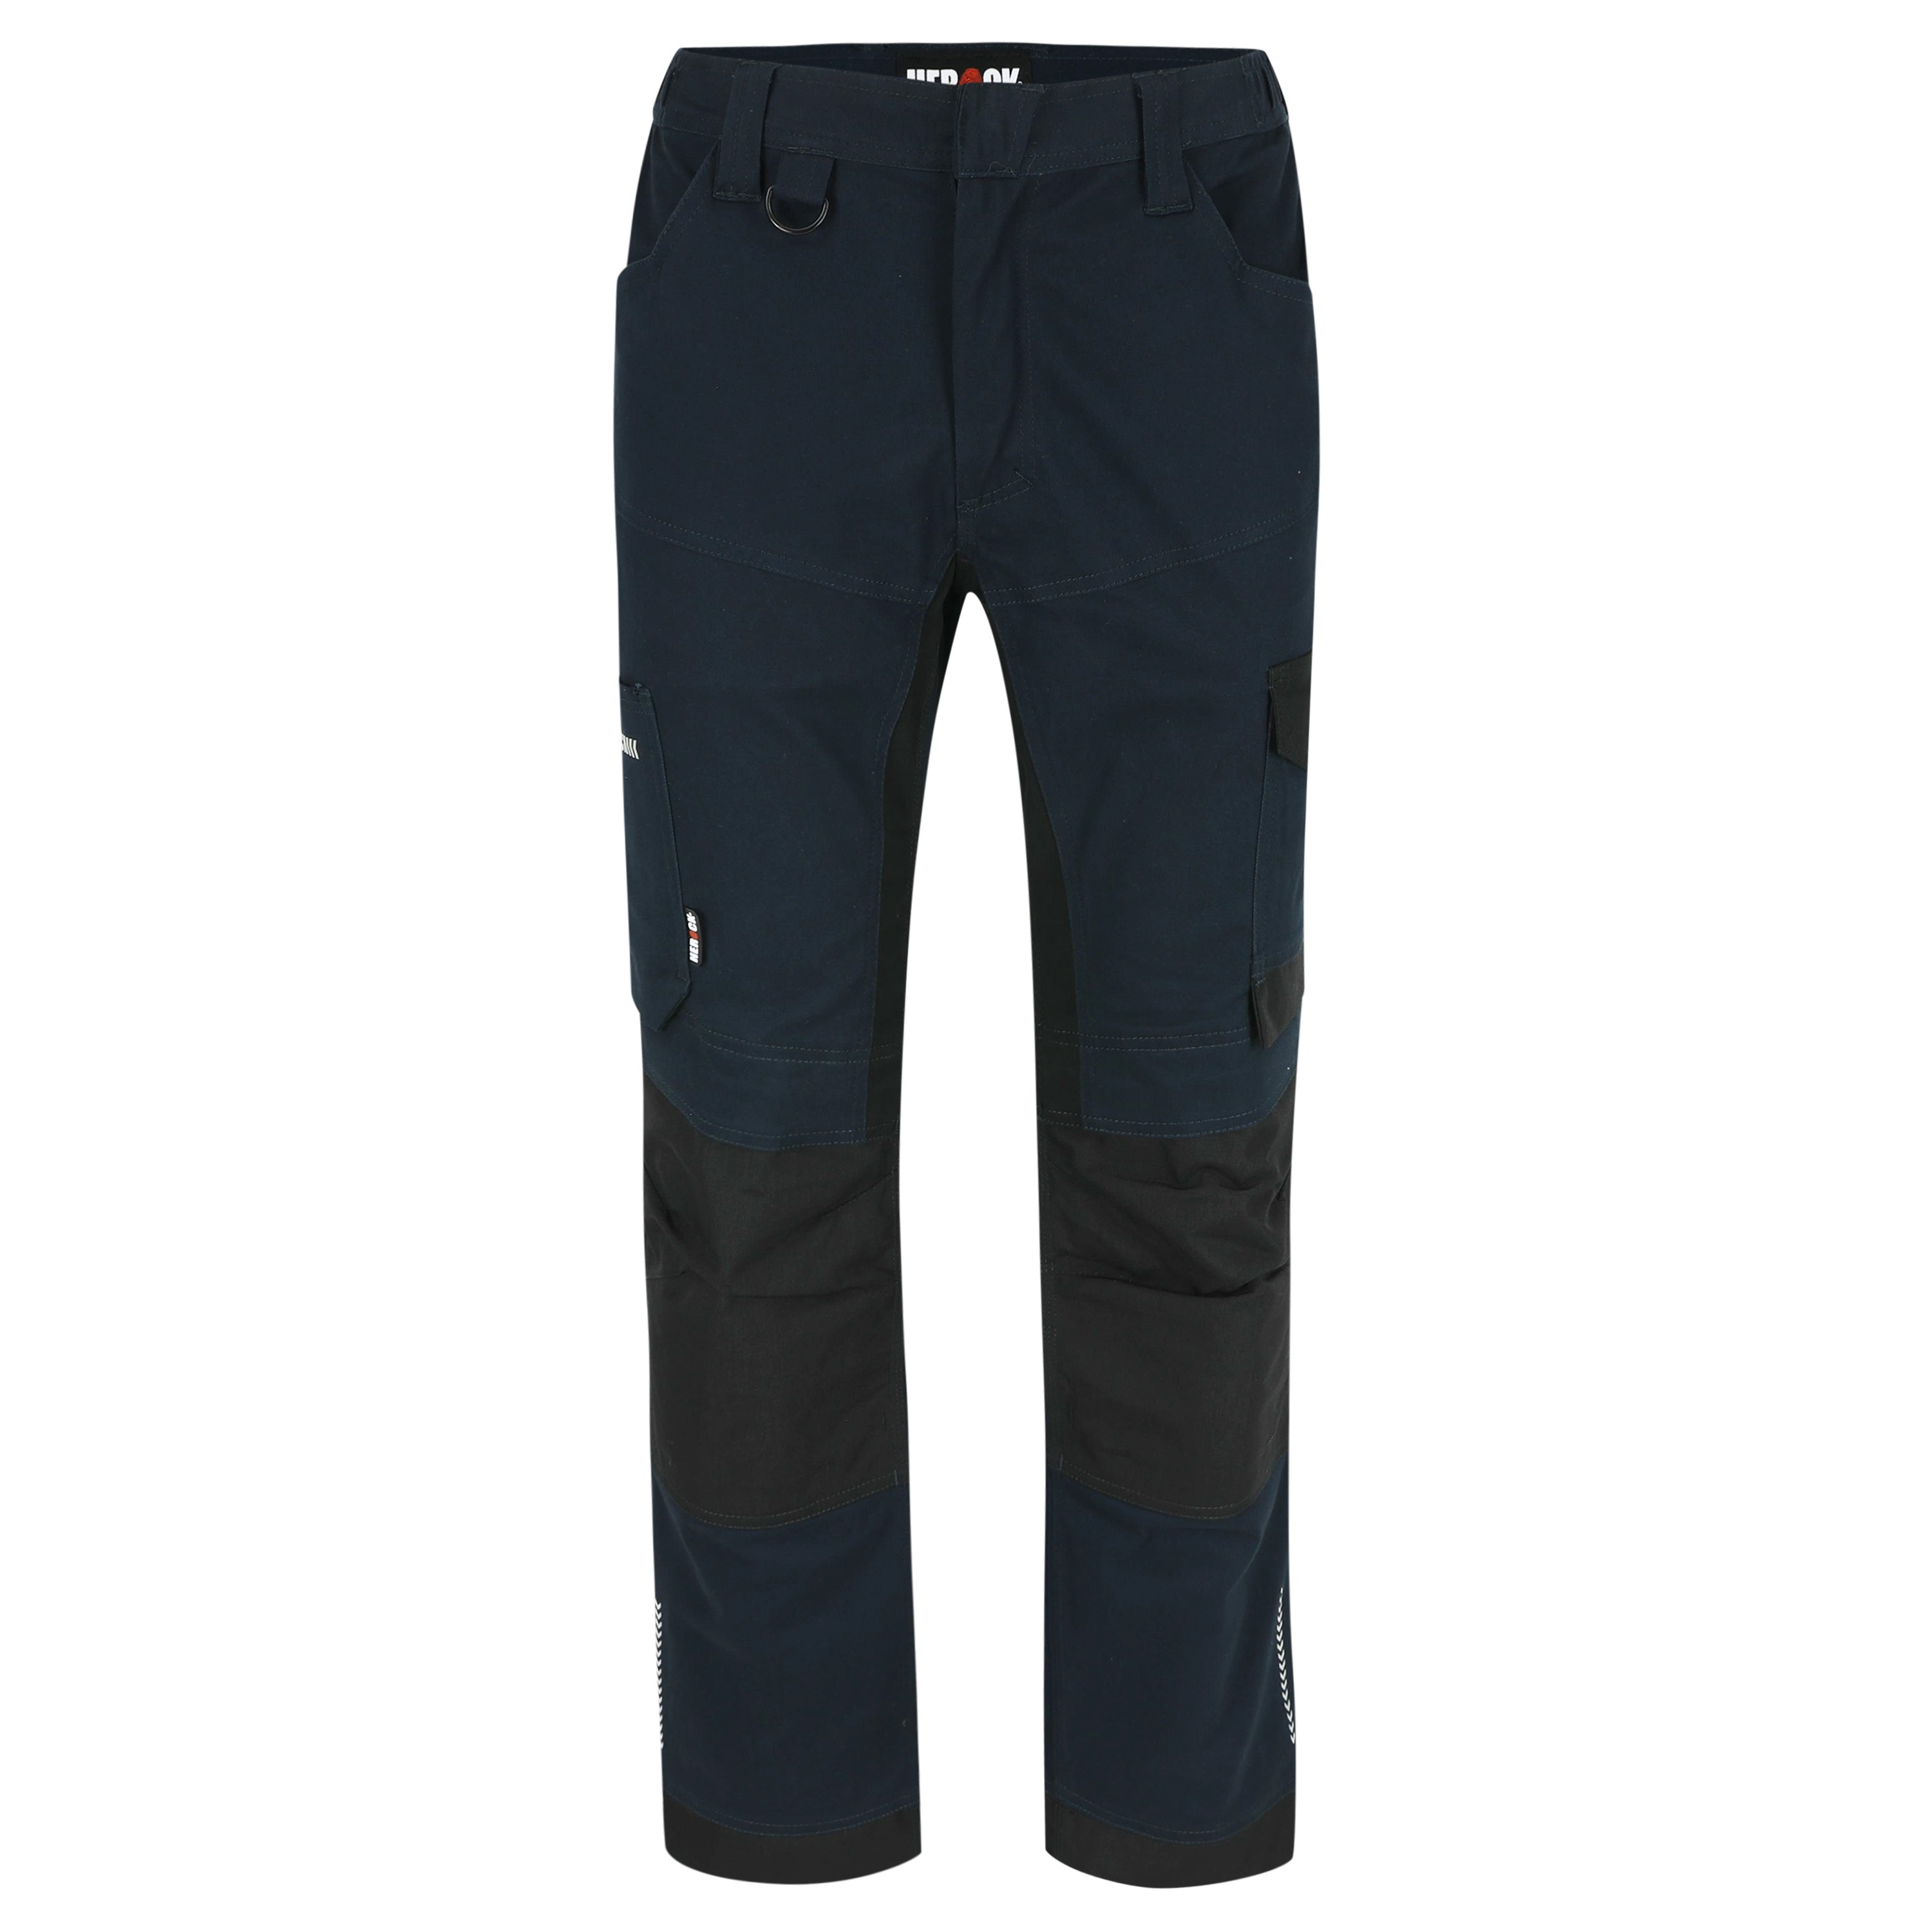 Pantalon travail coton stretch resistant Xeni Herock marine vue 1 cotepro.fr